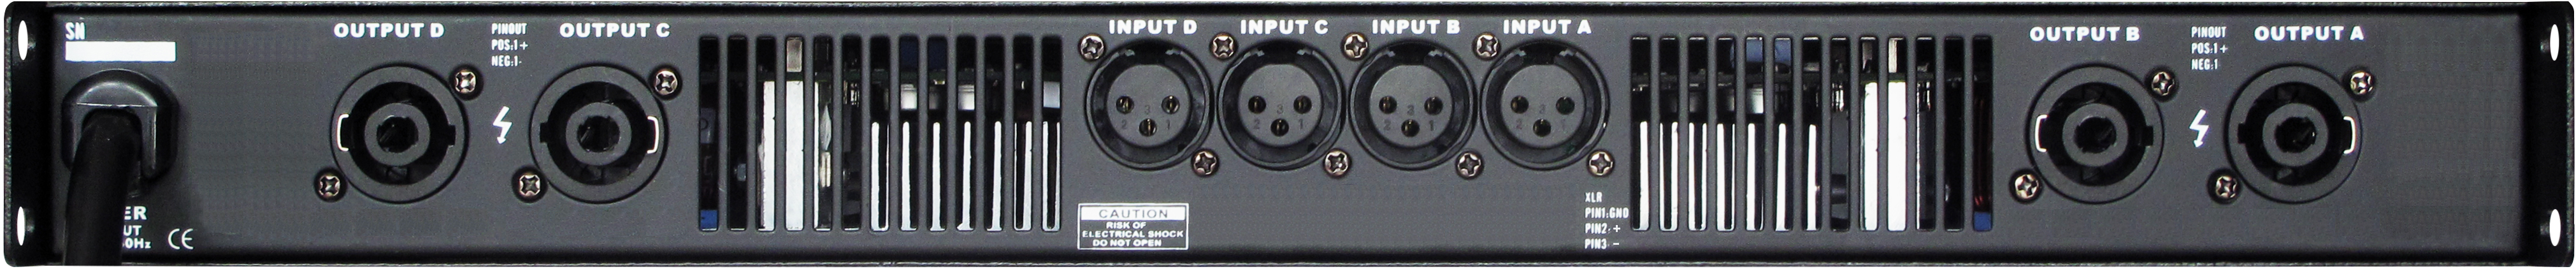 Verstärker M60Q-DSP - GISEN Audio